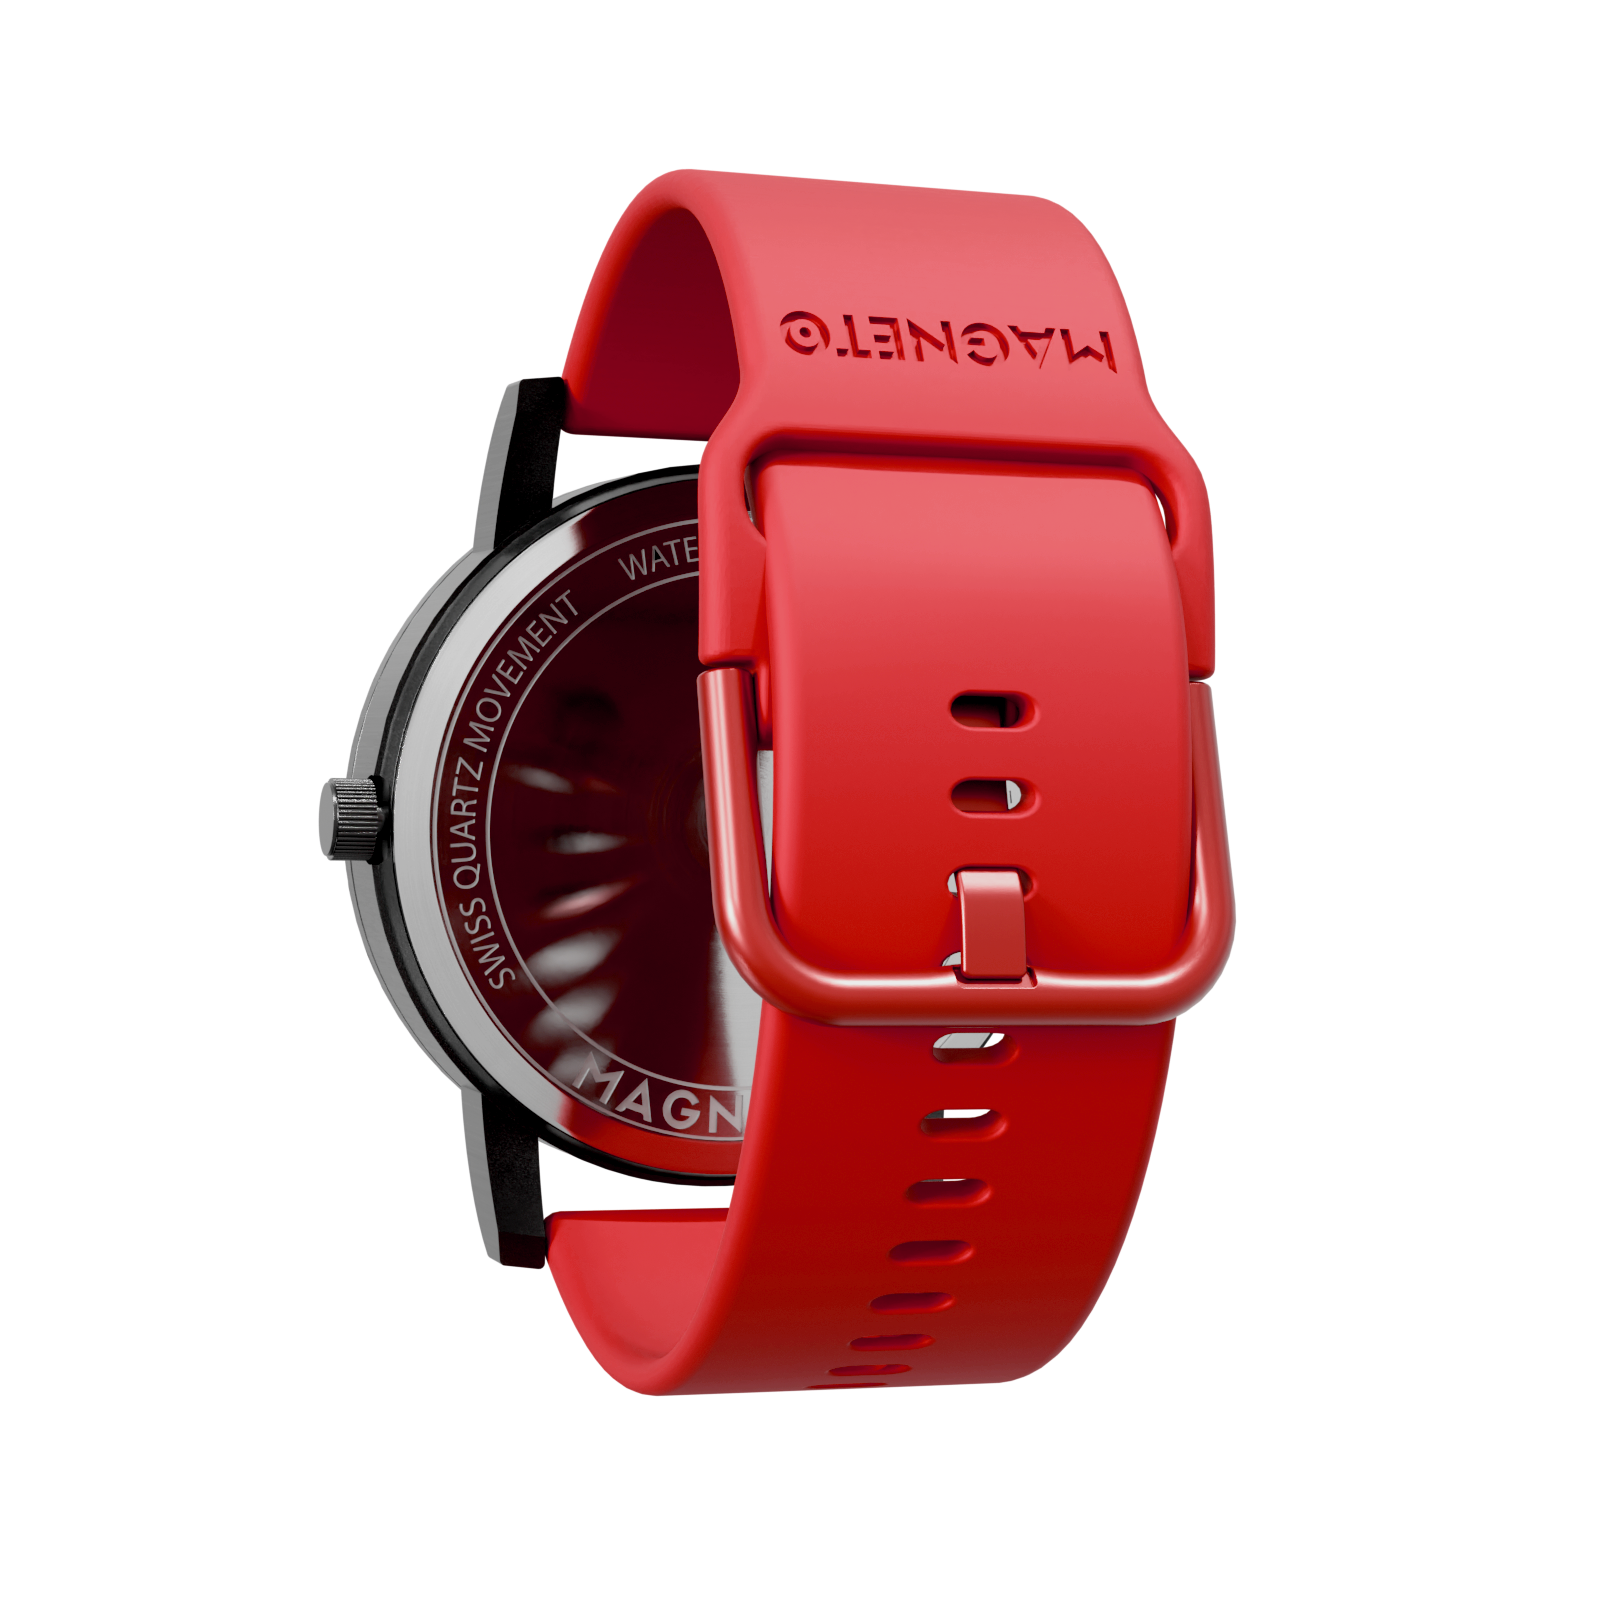 Magneto-Watch-Silikon-Rot-Side